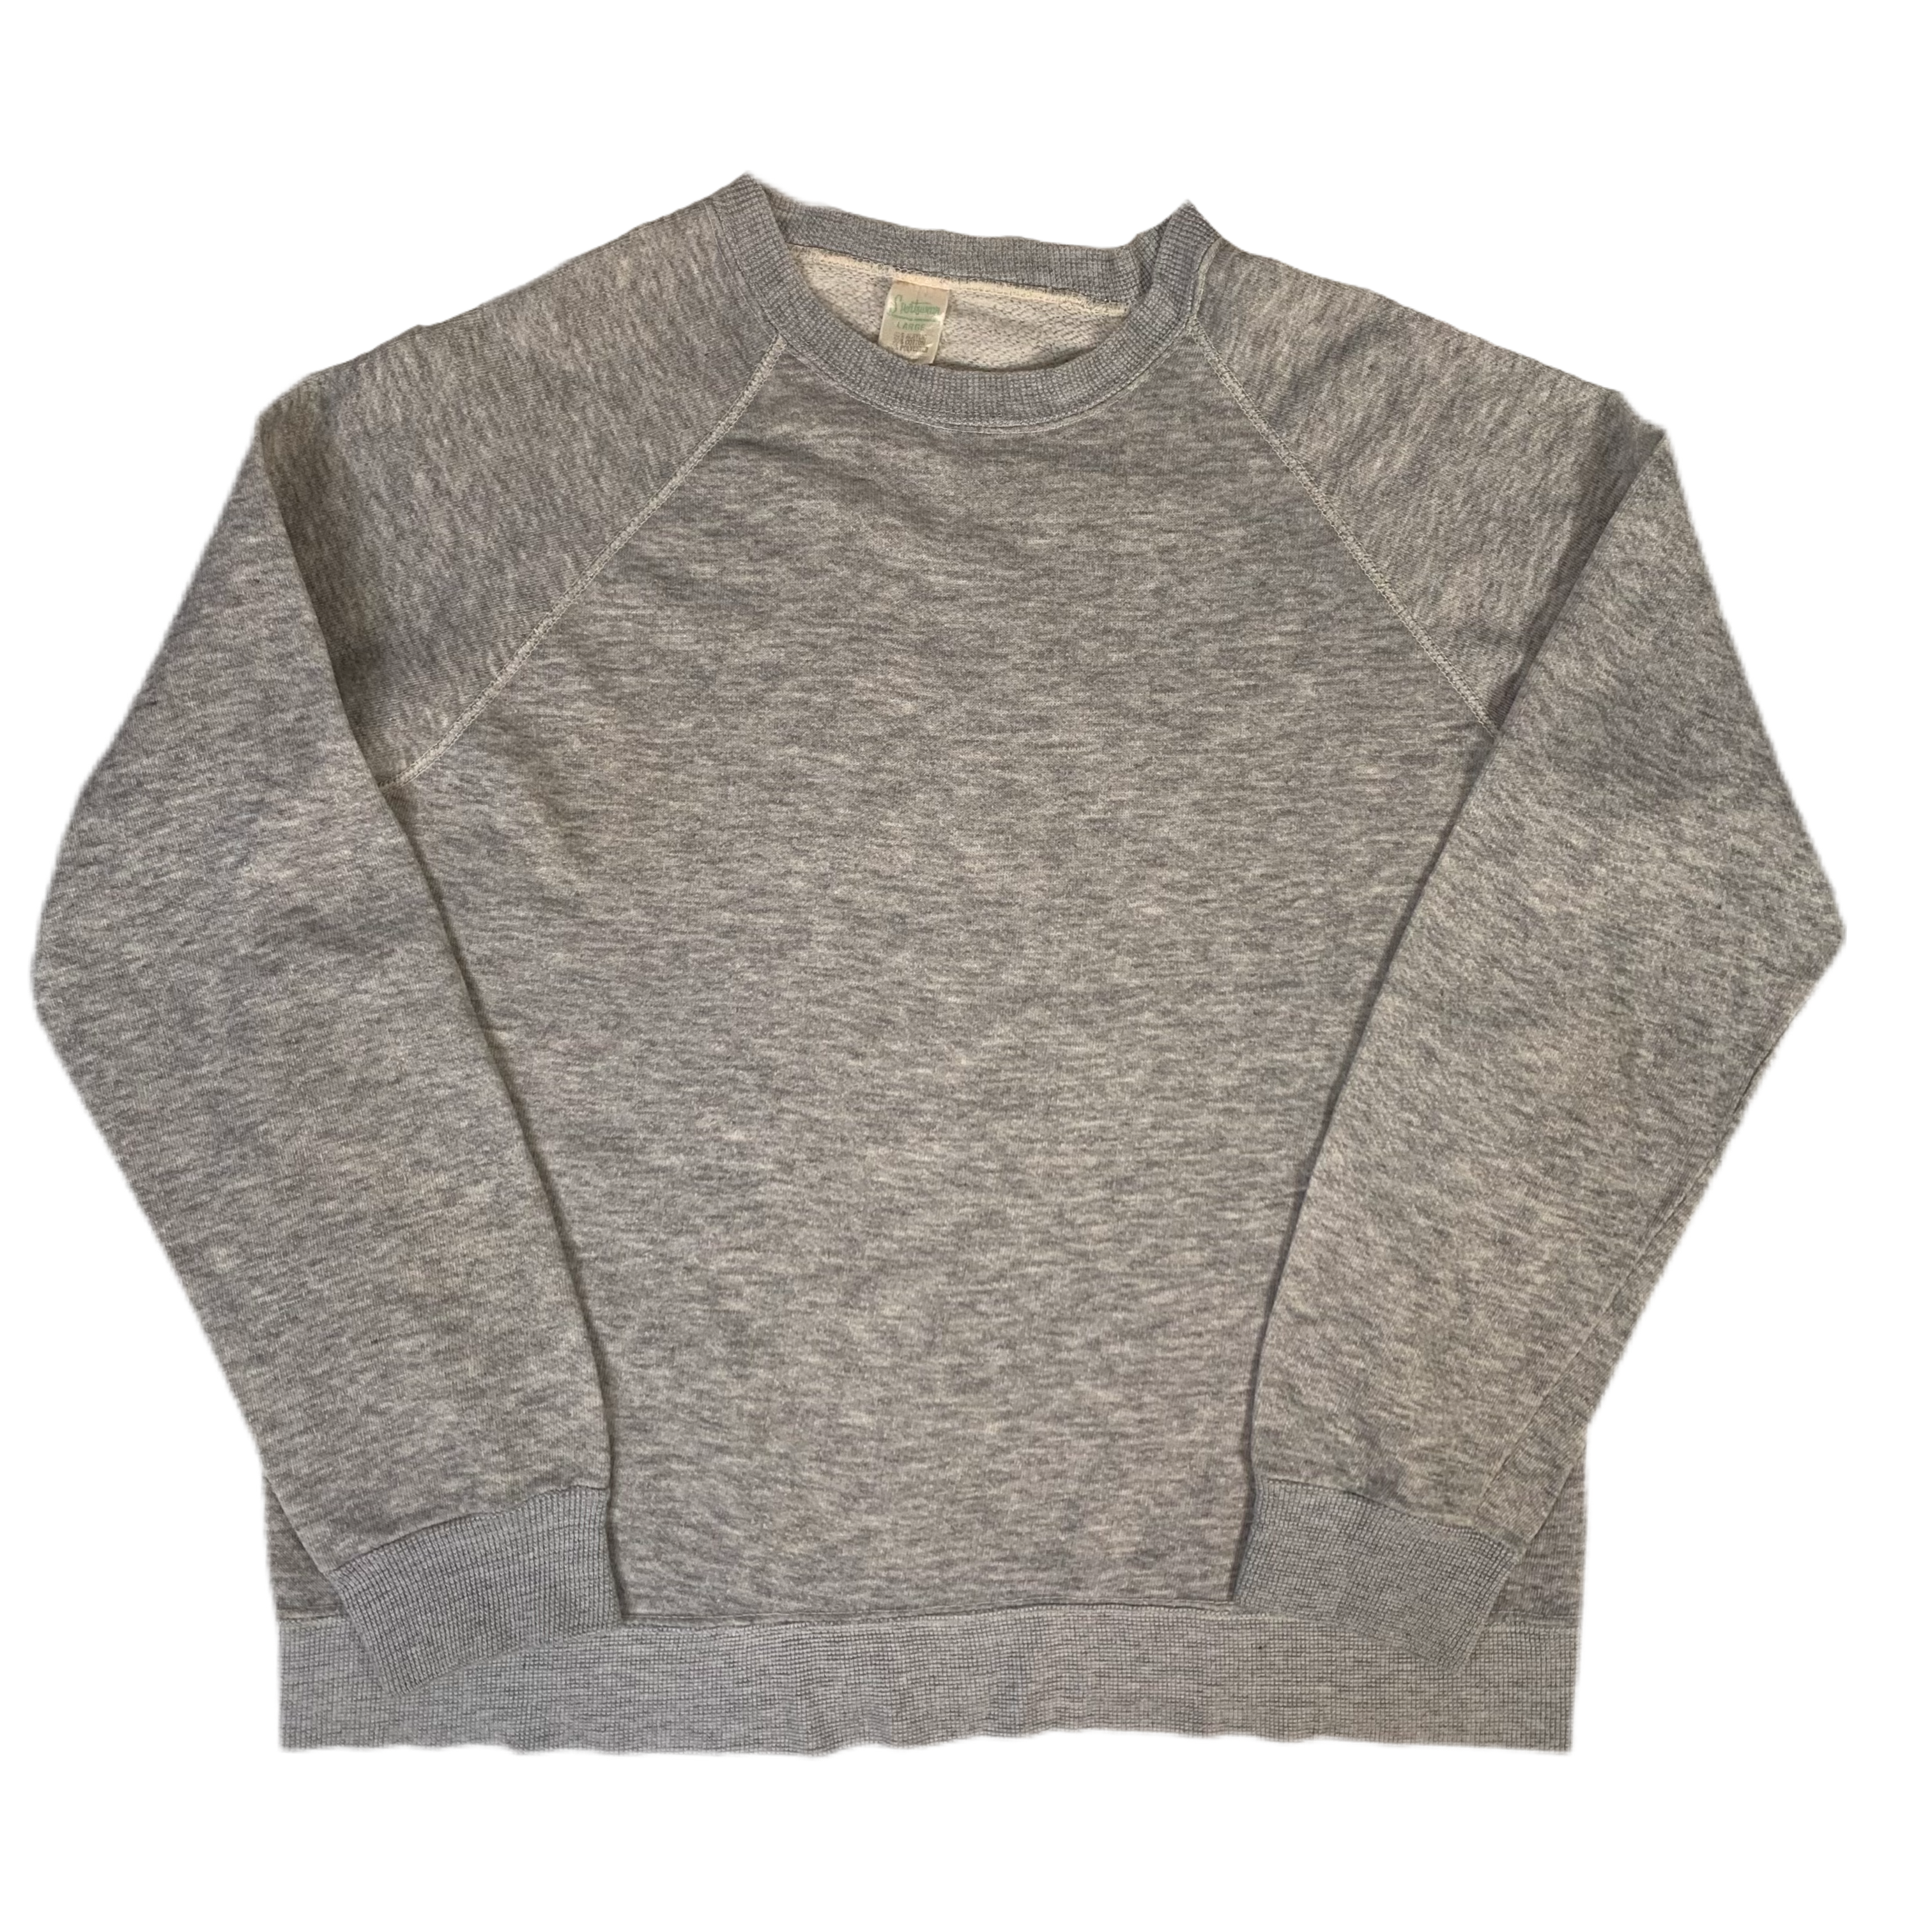 Vintage Sportswear Tri-Blend Raglan Sweatshirt